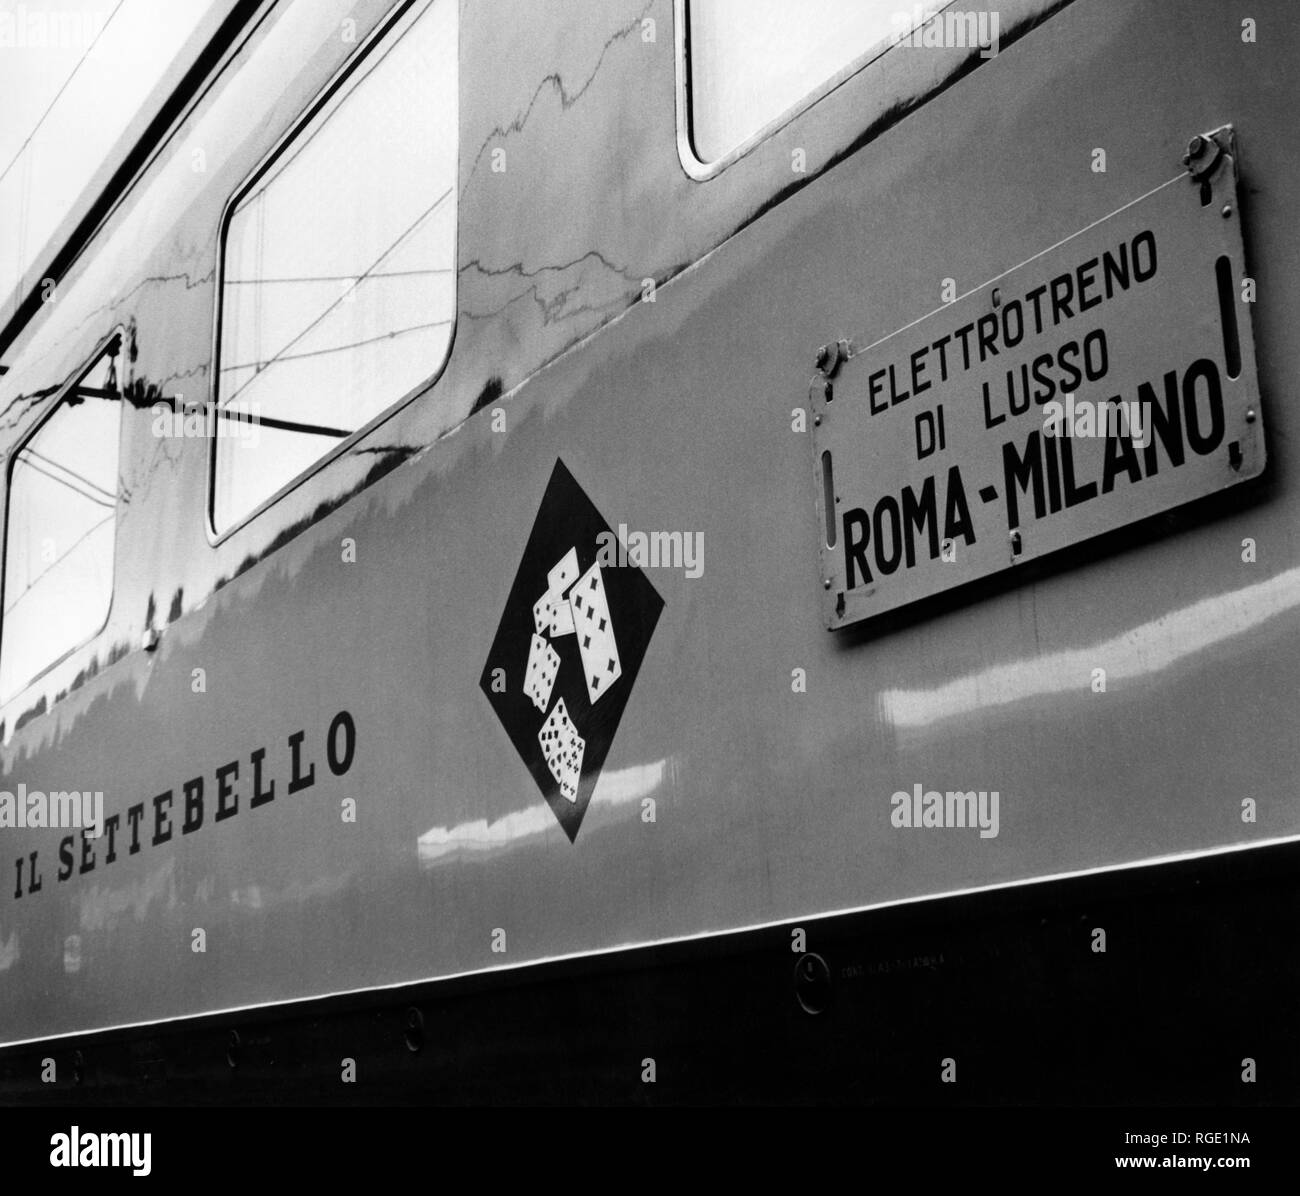 Elettrotreno di Lusso roma-milano, eléctricos, trenes de pasajeros settebello ETR 300, tren, Italia 1960 Foto de stock